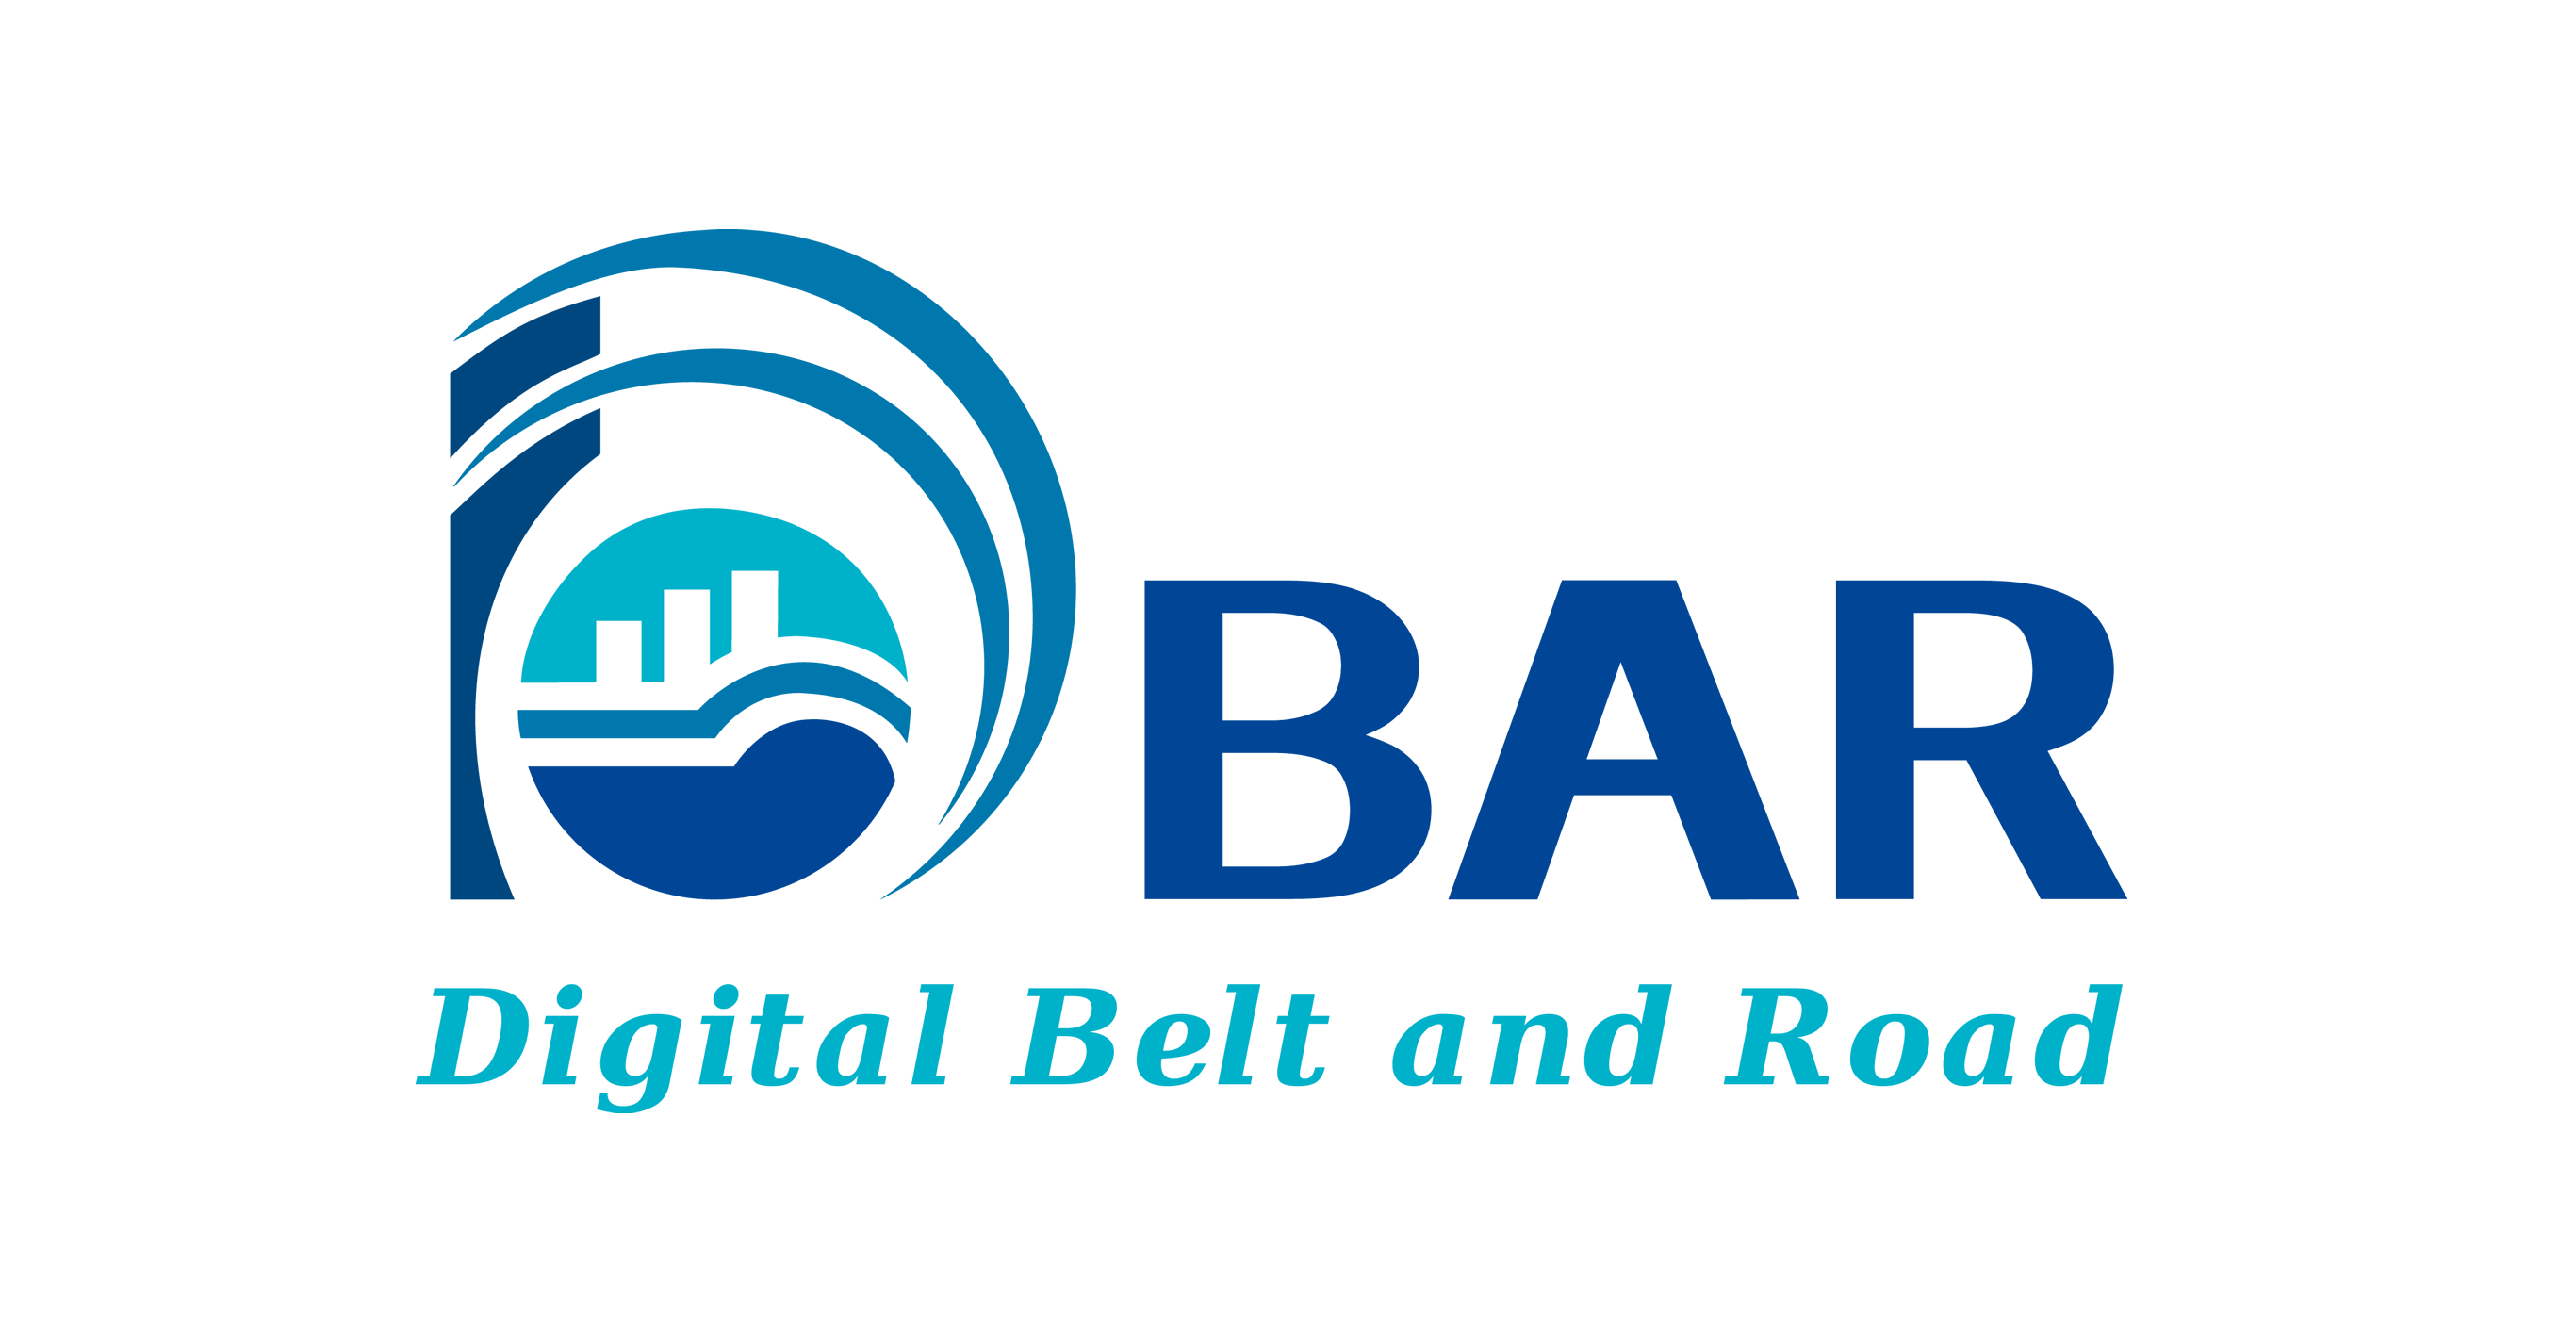 Digital Belt and Road Program (DBAR)